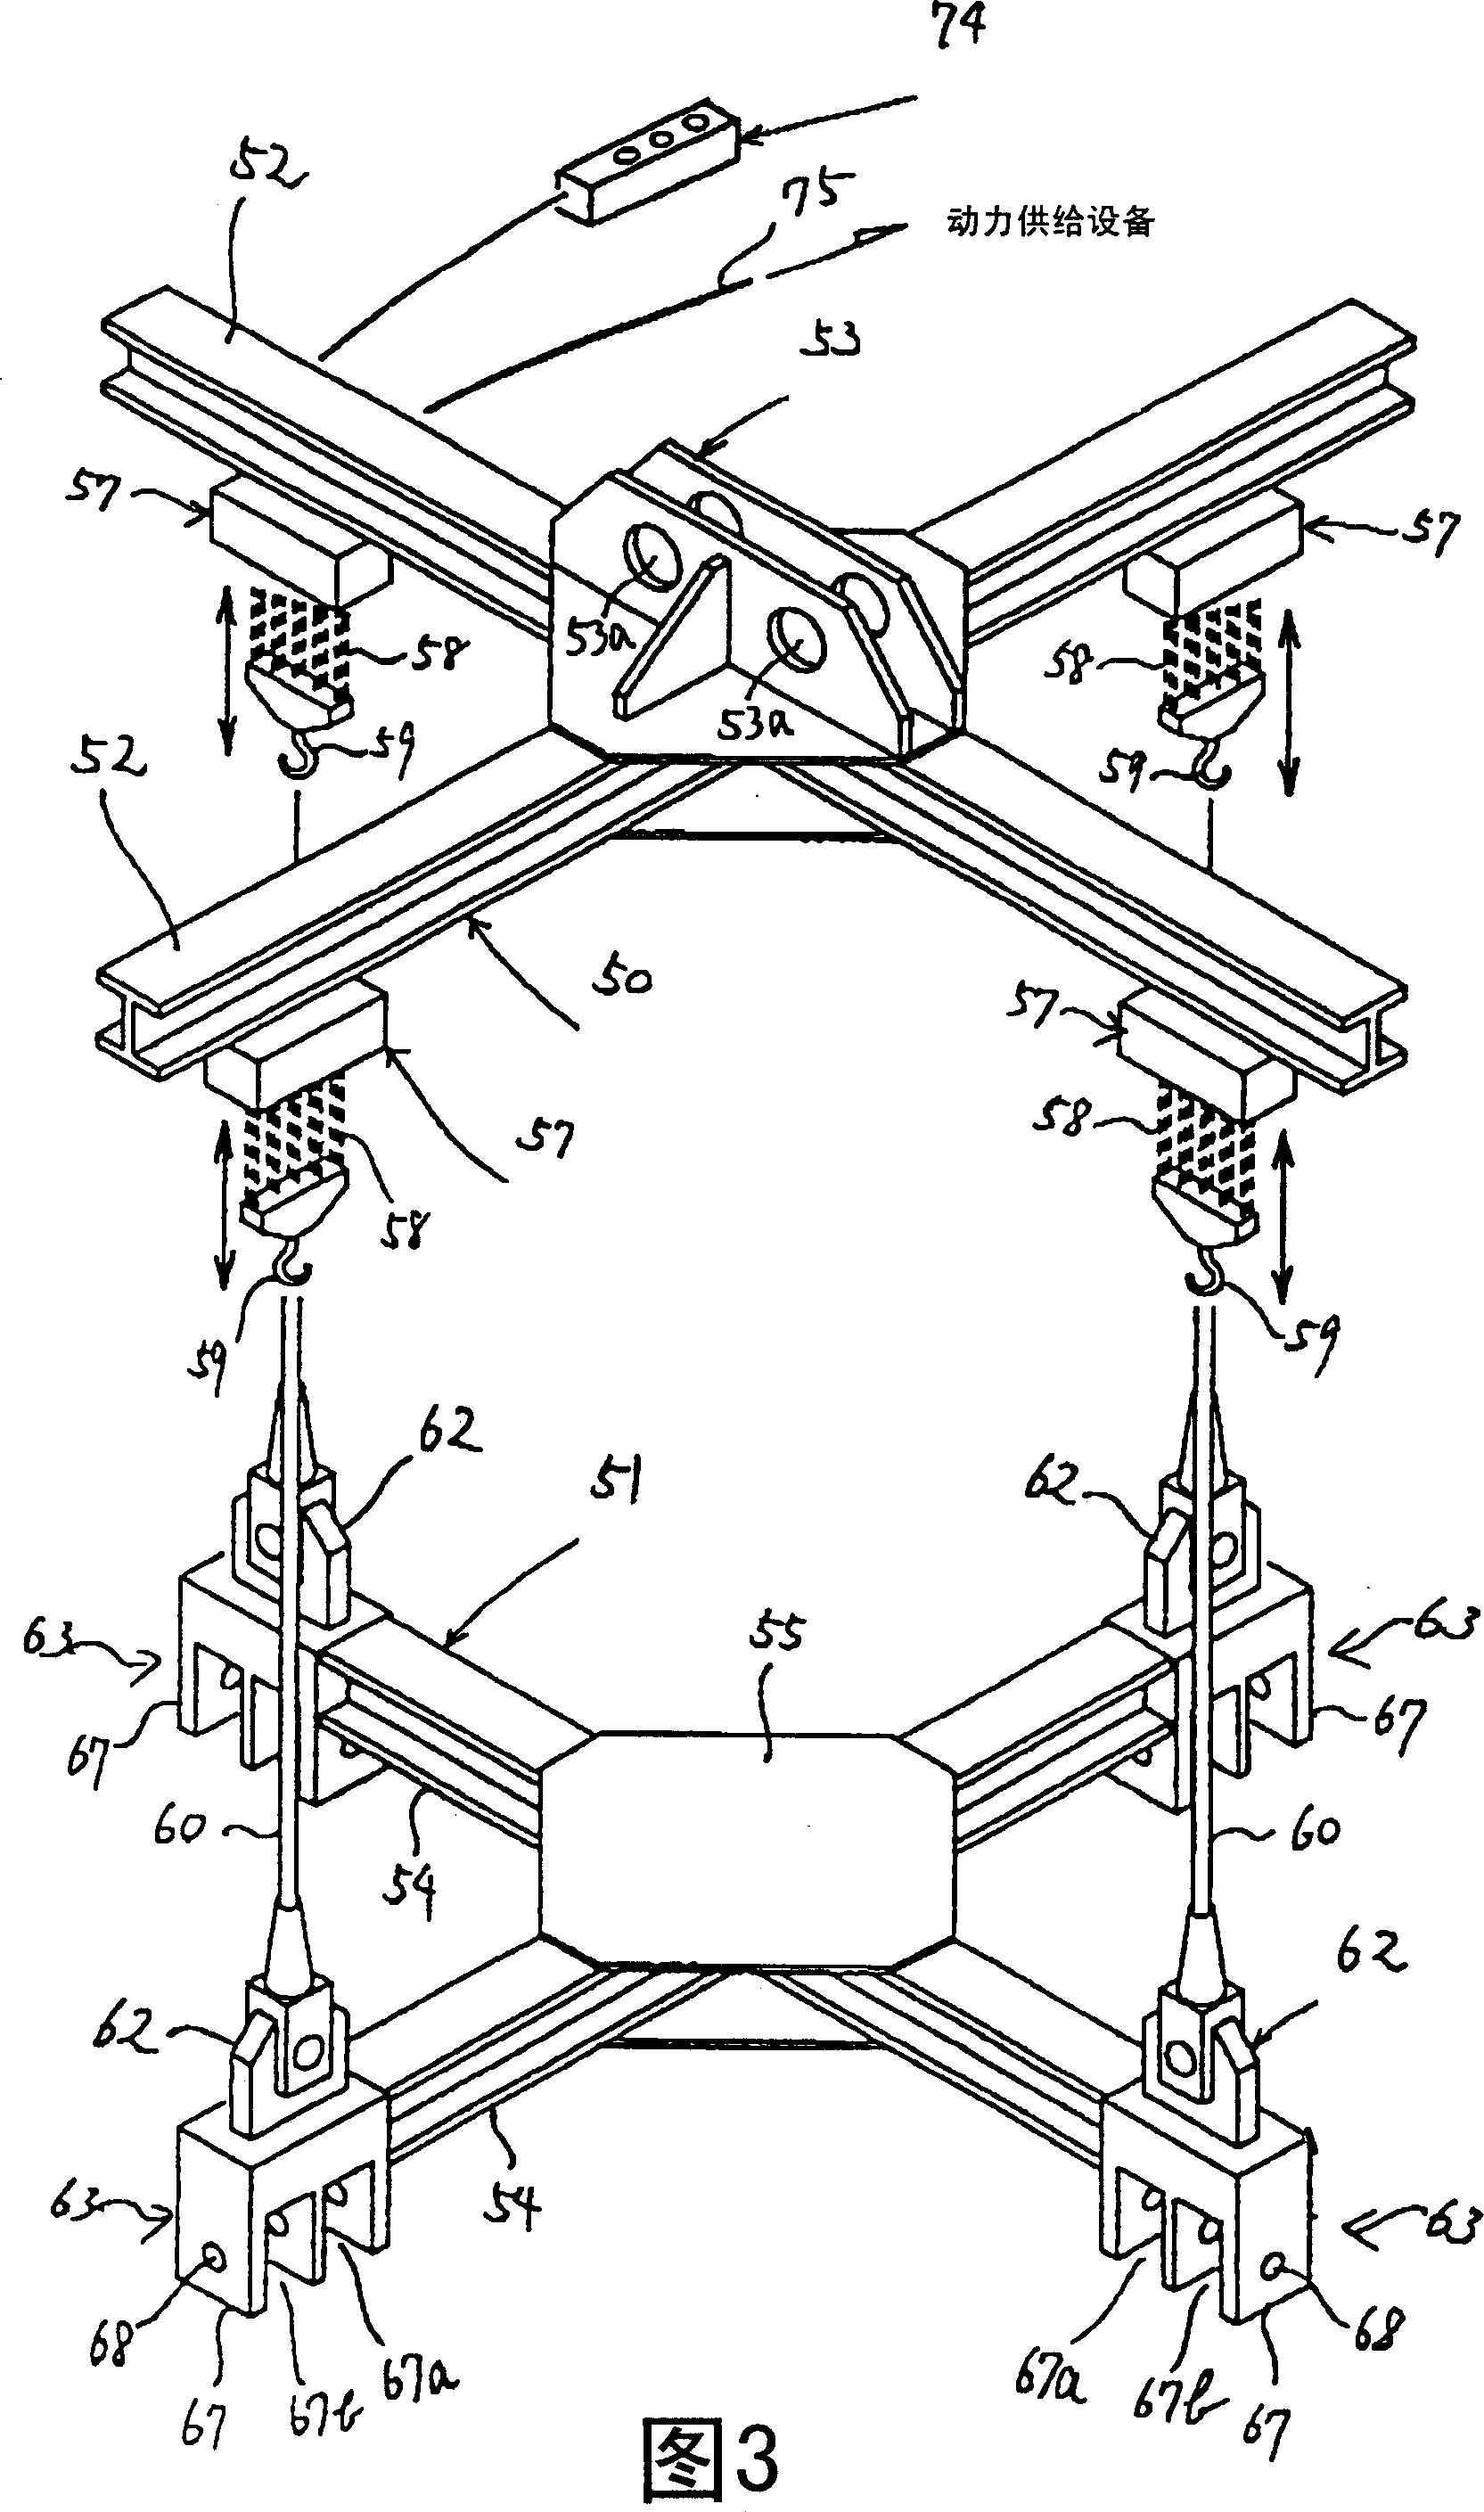 Apparatus for craning machine in atomic reactor